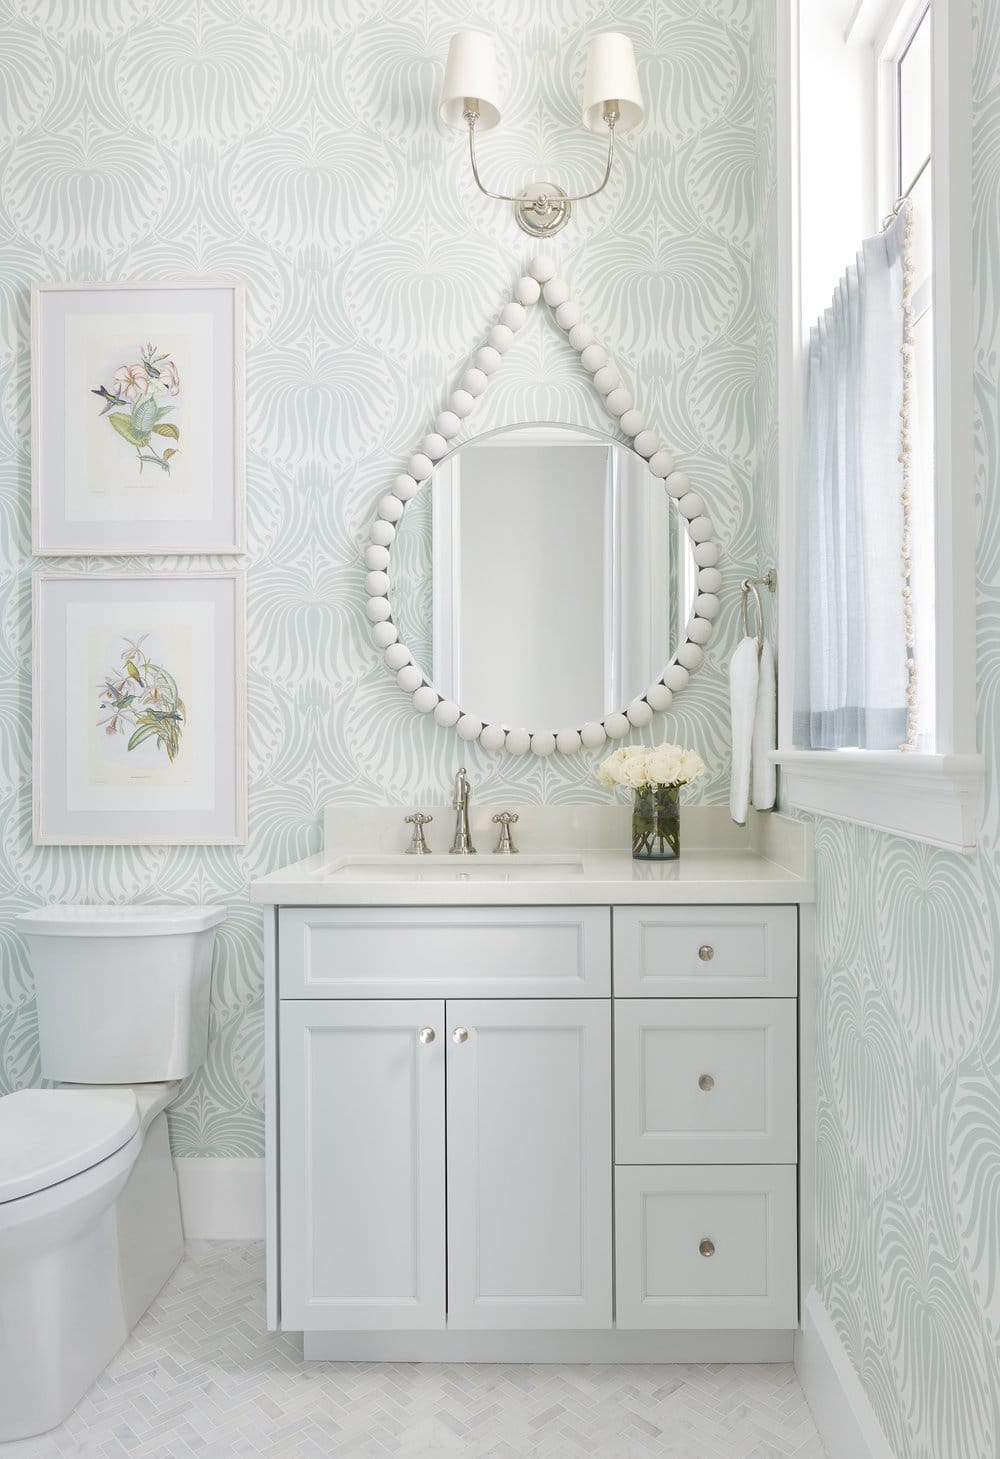 bathroom design - interior design - beach house - beach house design - Kara Miller Interiors - Brantley Photography - bathroom - bathroom decor - blue and white